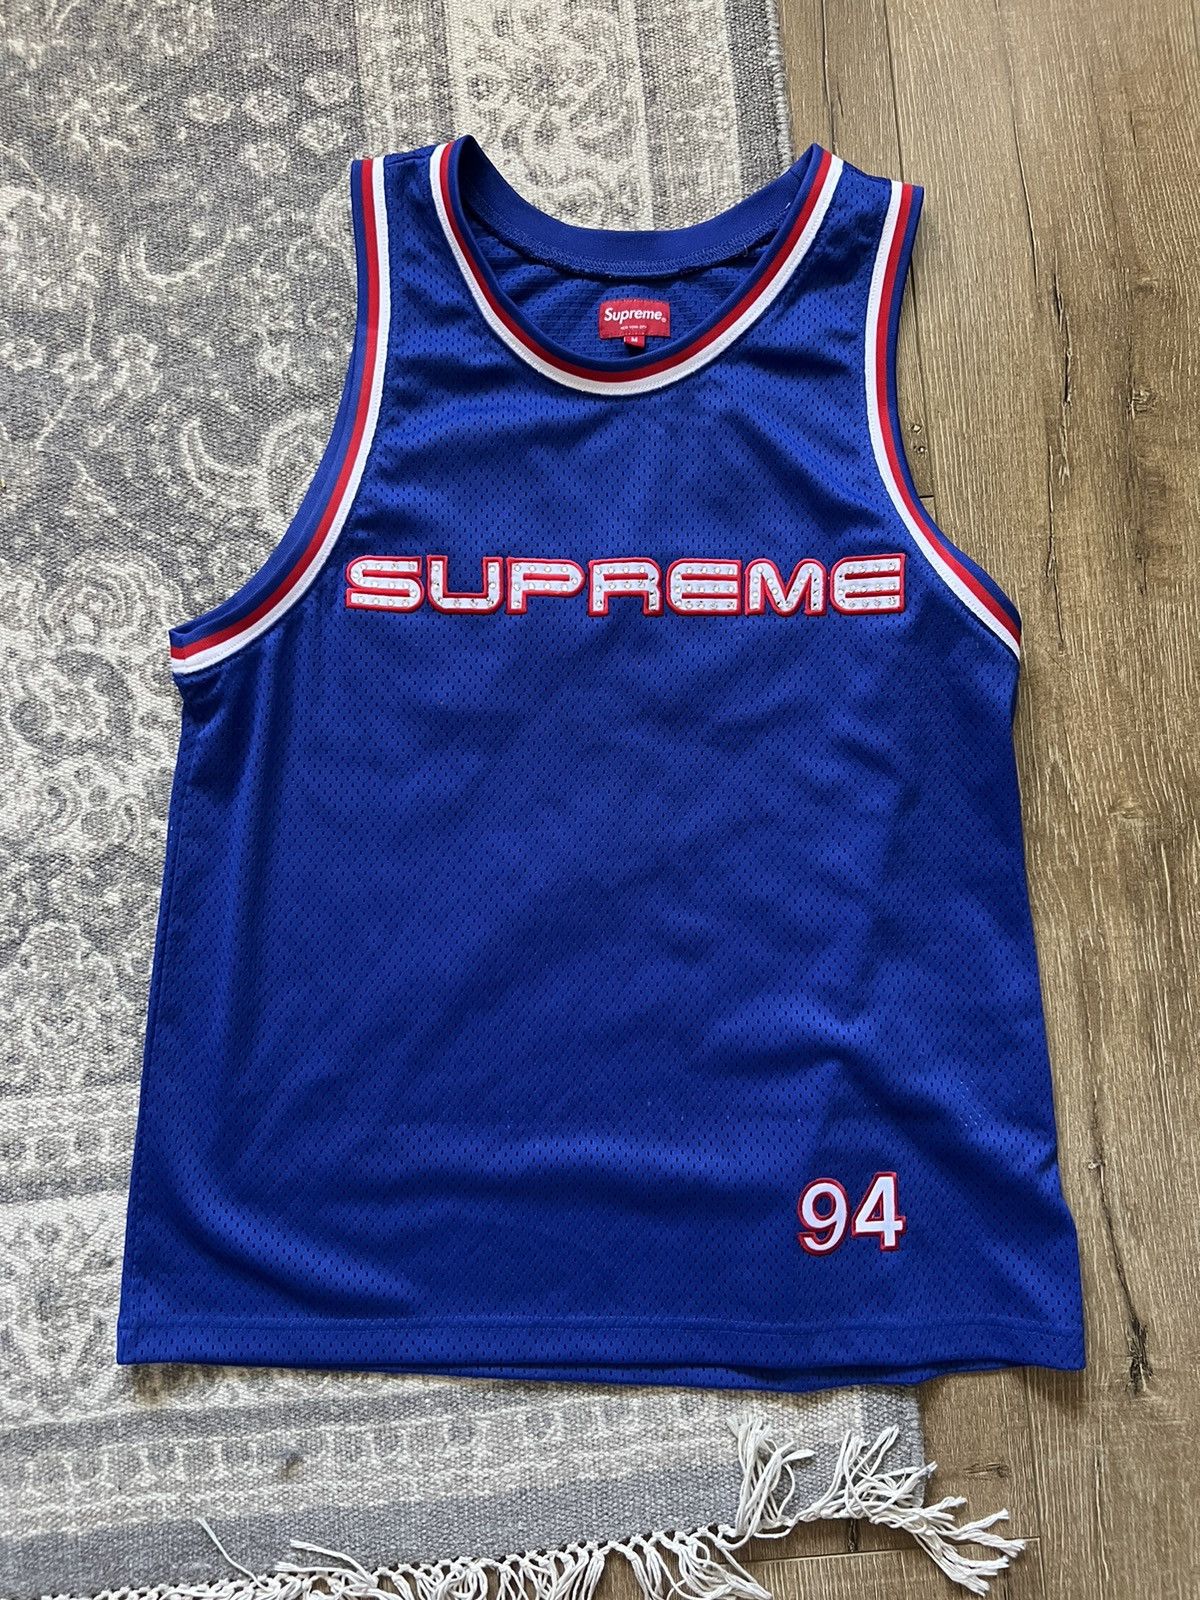 Supreme Supreme Rhinestone Basketball Jersey | Grailed